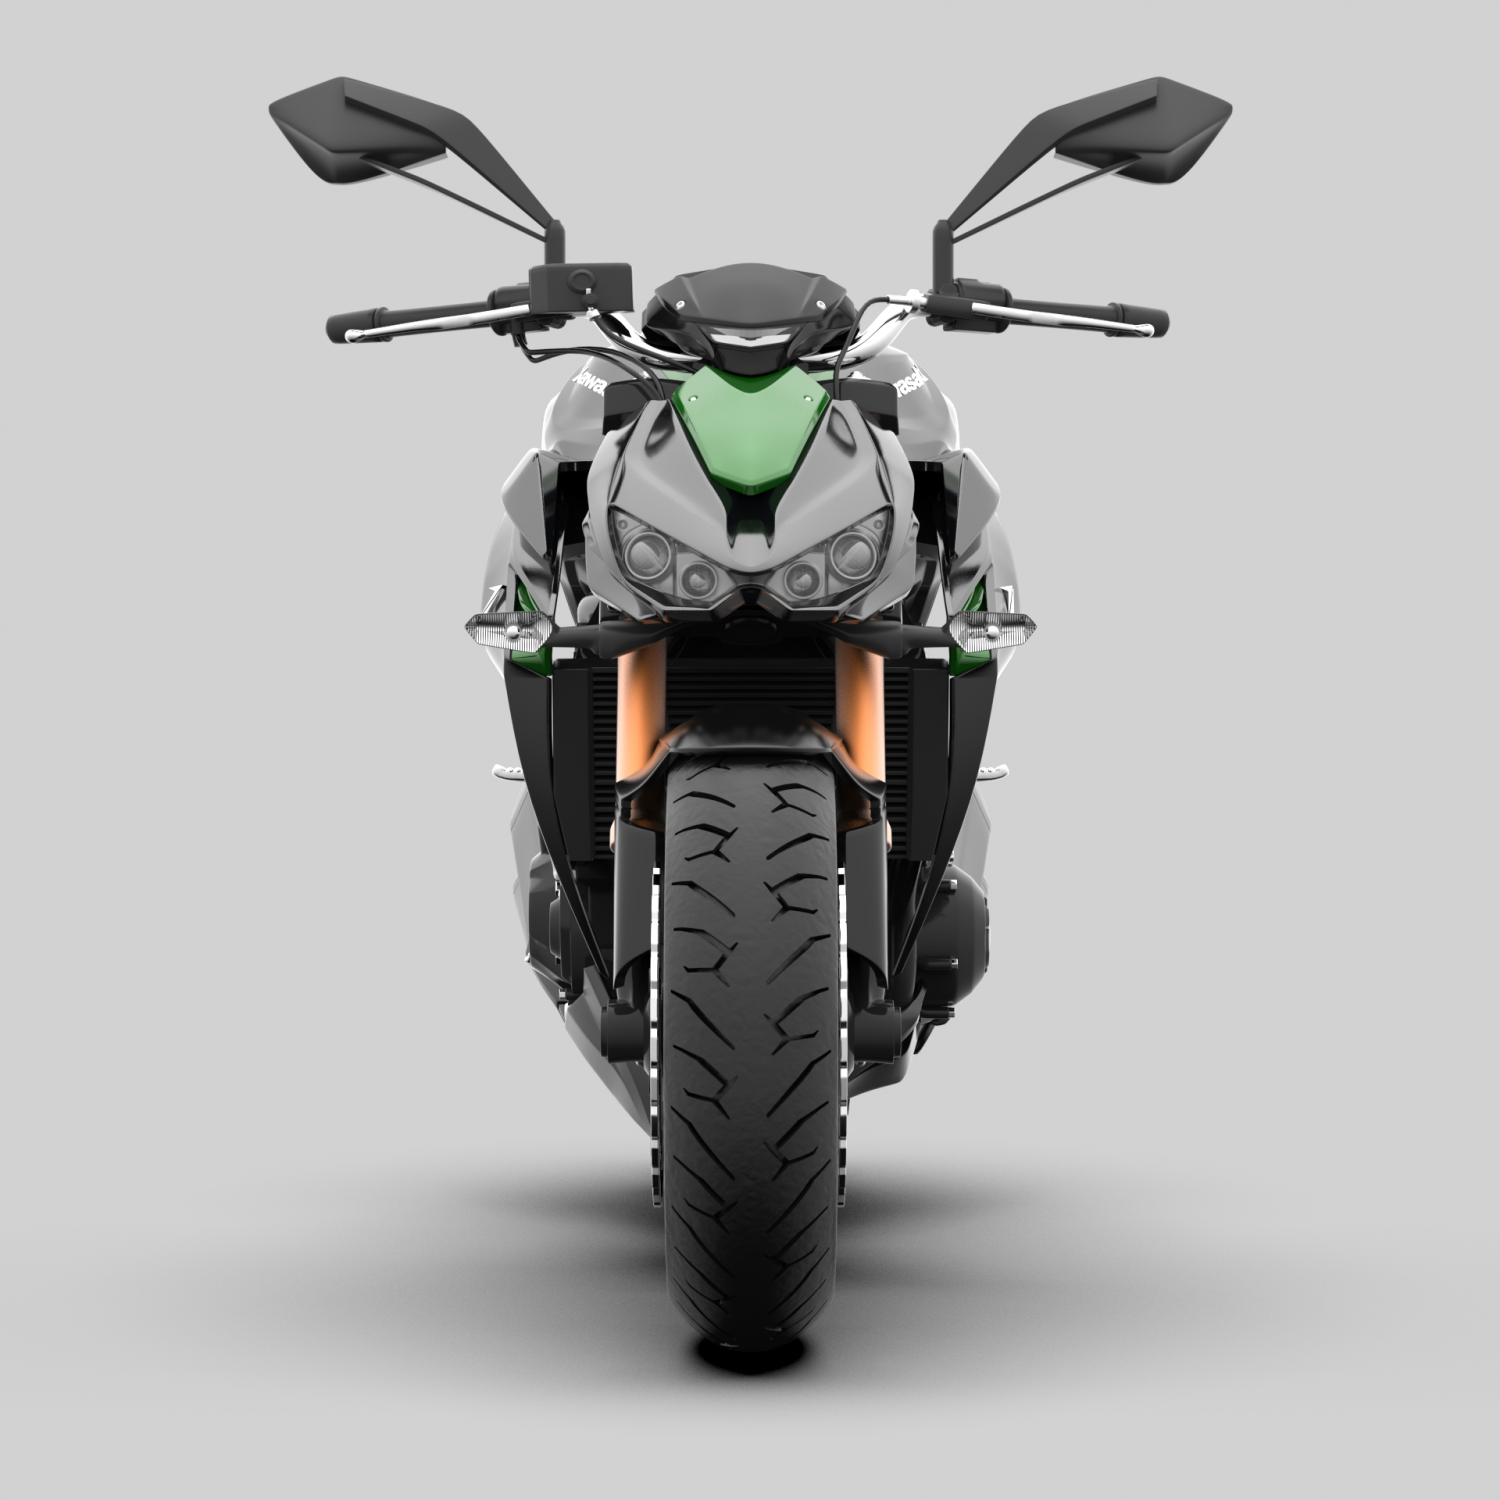 Kawasaki z1000 2015 3D Model in Motorcycle 3DExport